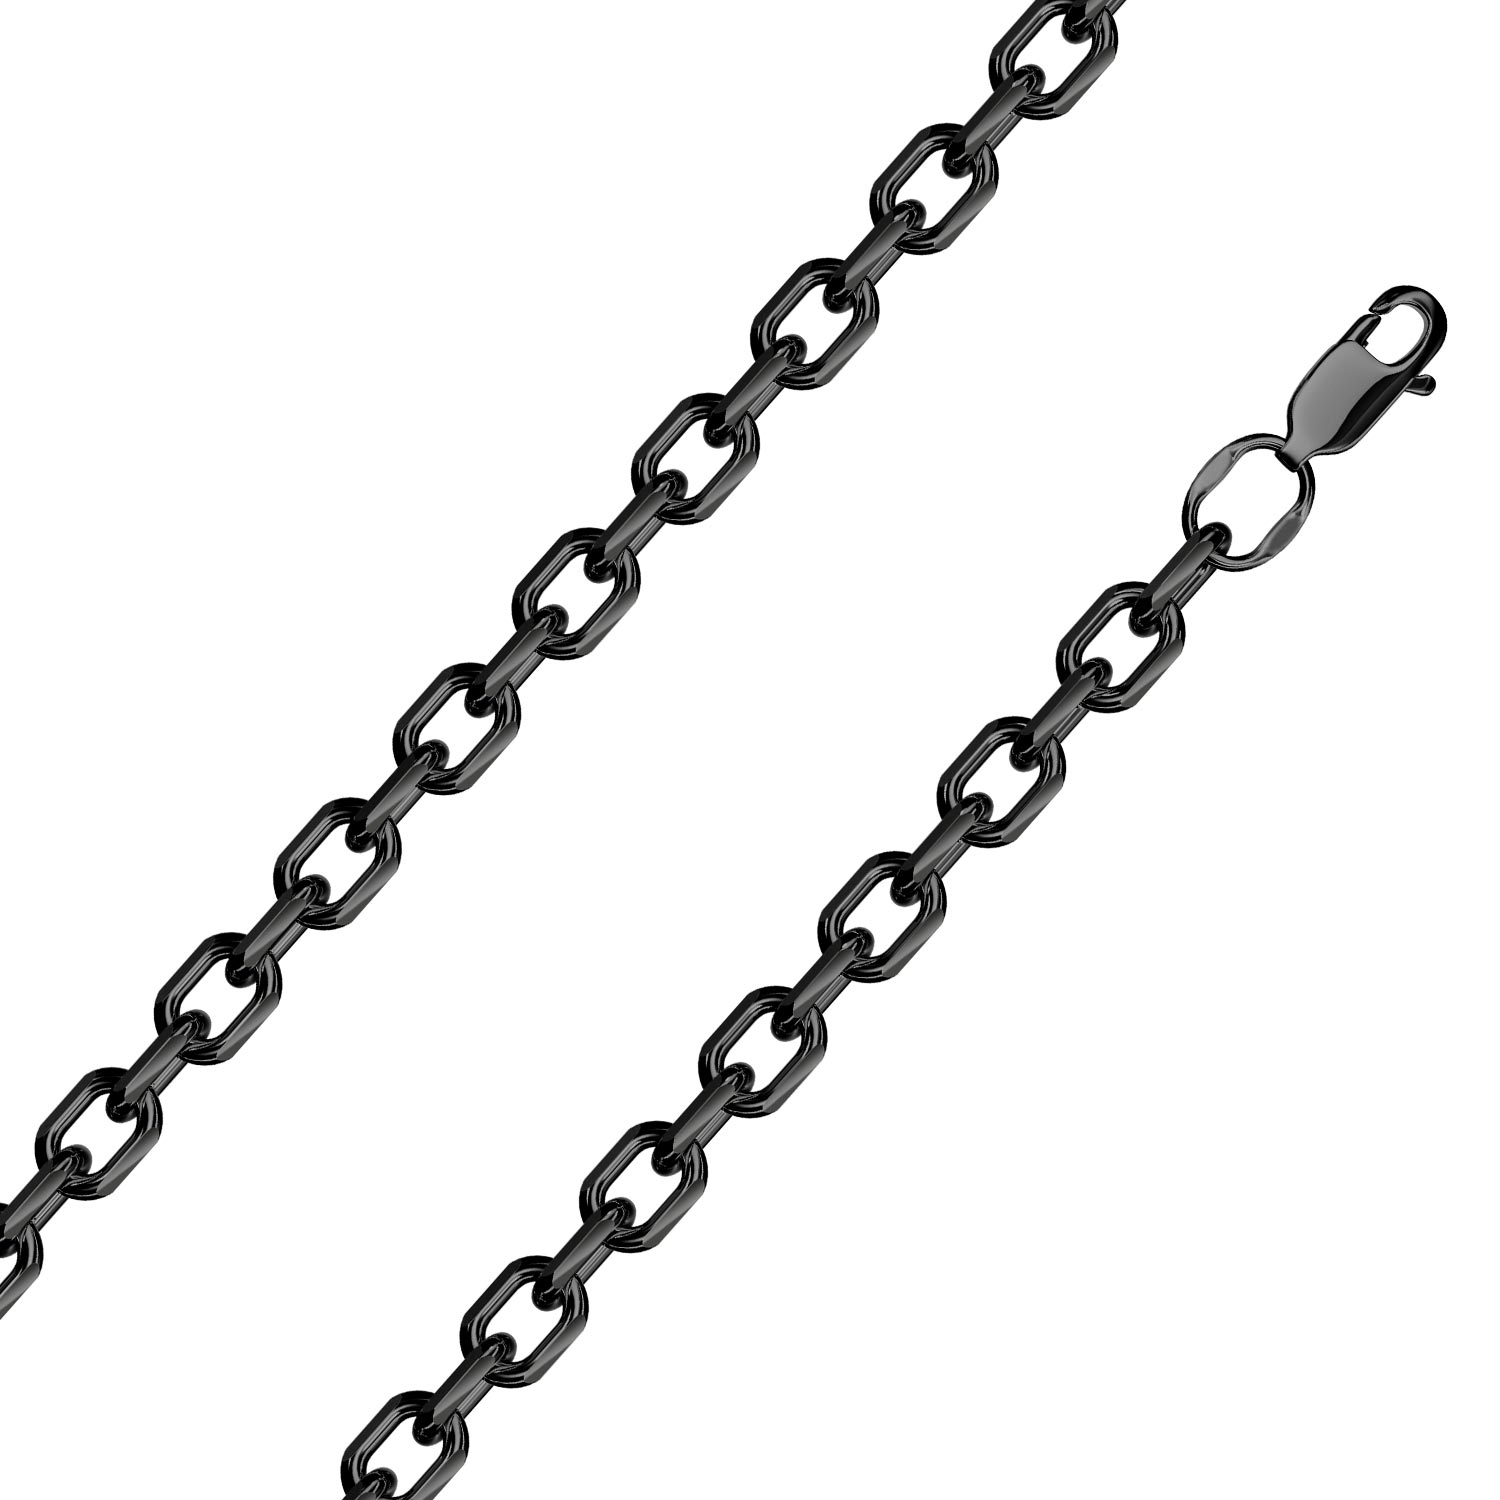 Мужская серебряная цепочка на шею Krastsvetmet NC-22-206-6-1-20 с плетением якорное